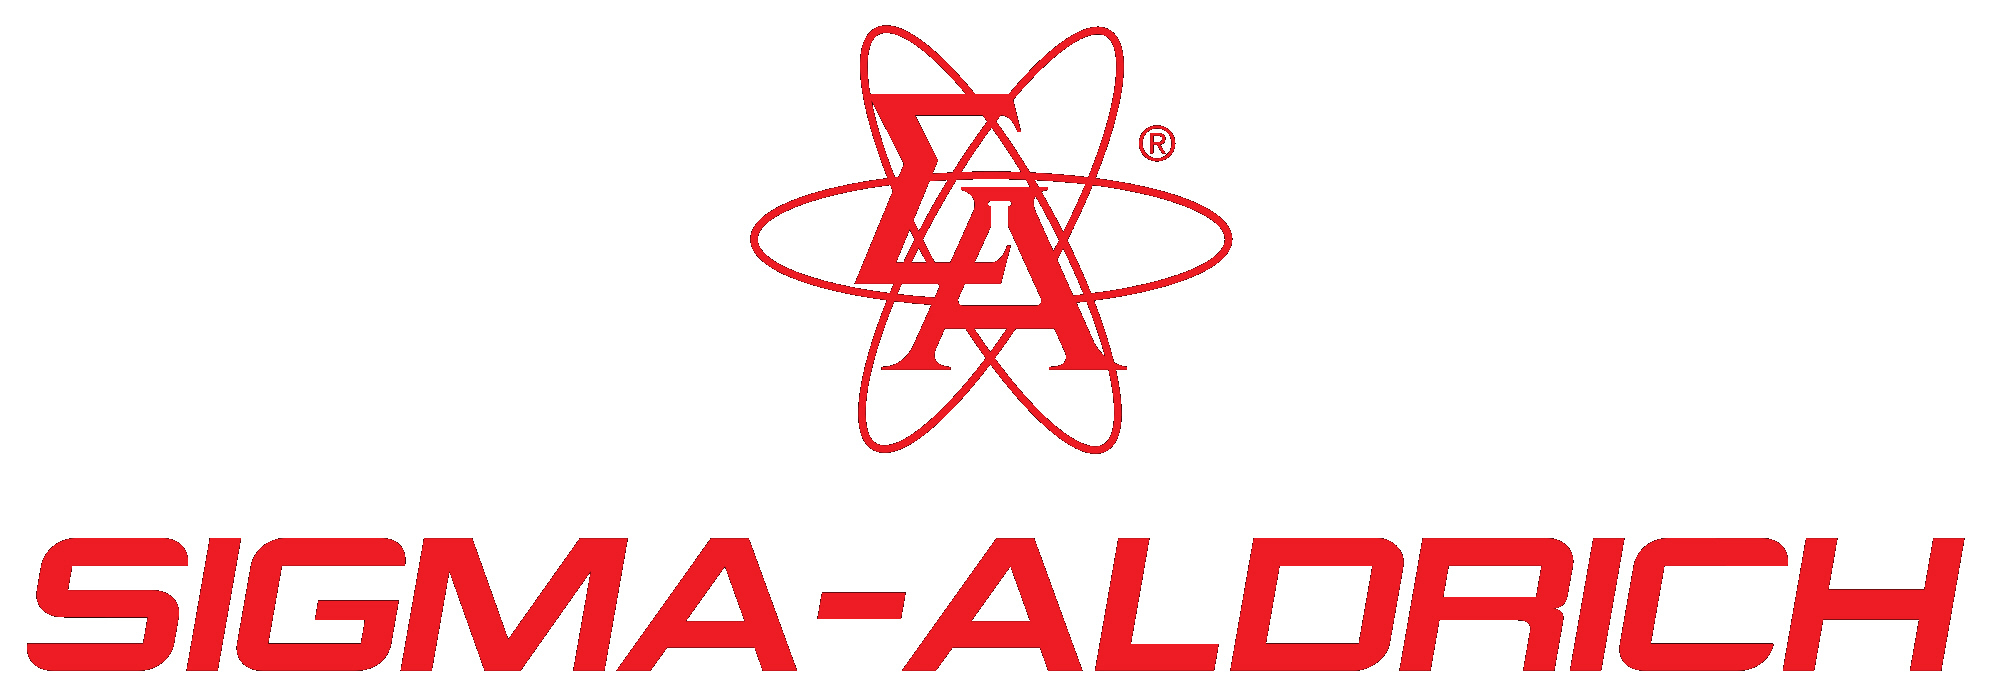 Sigma-Aldrich_logo